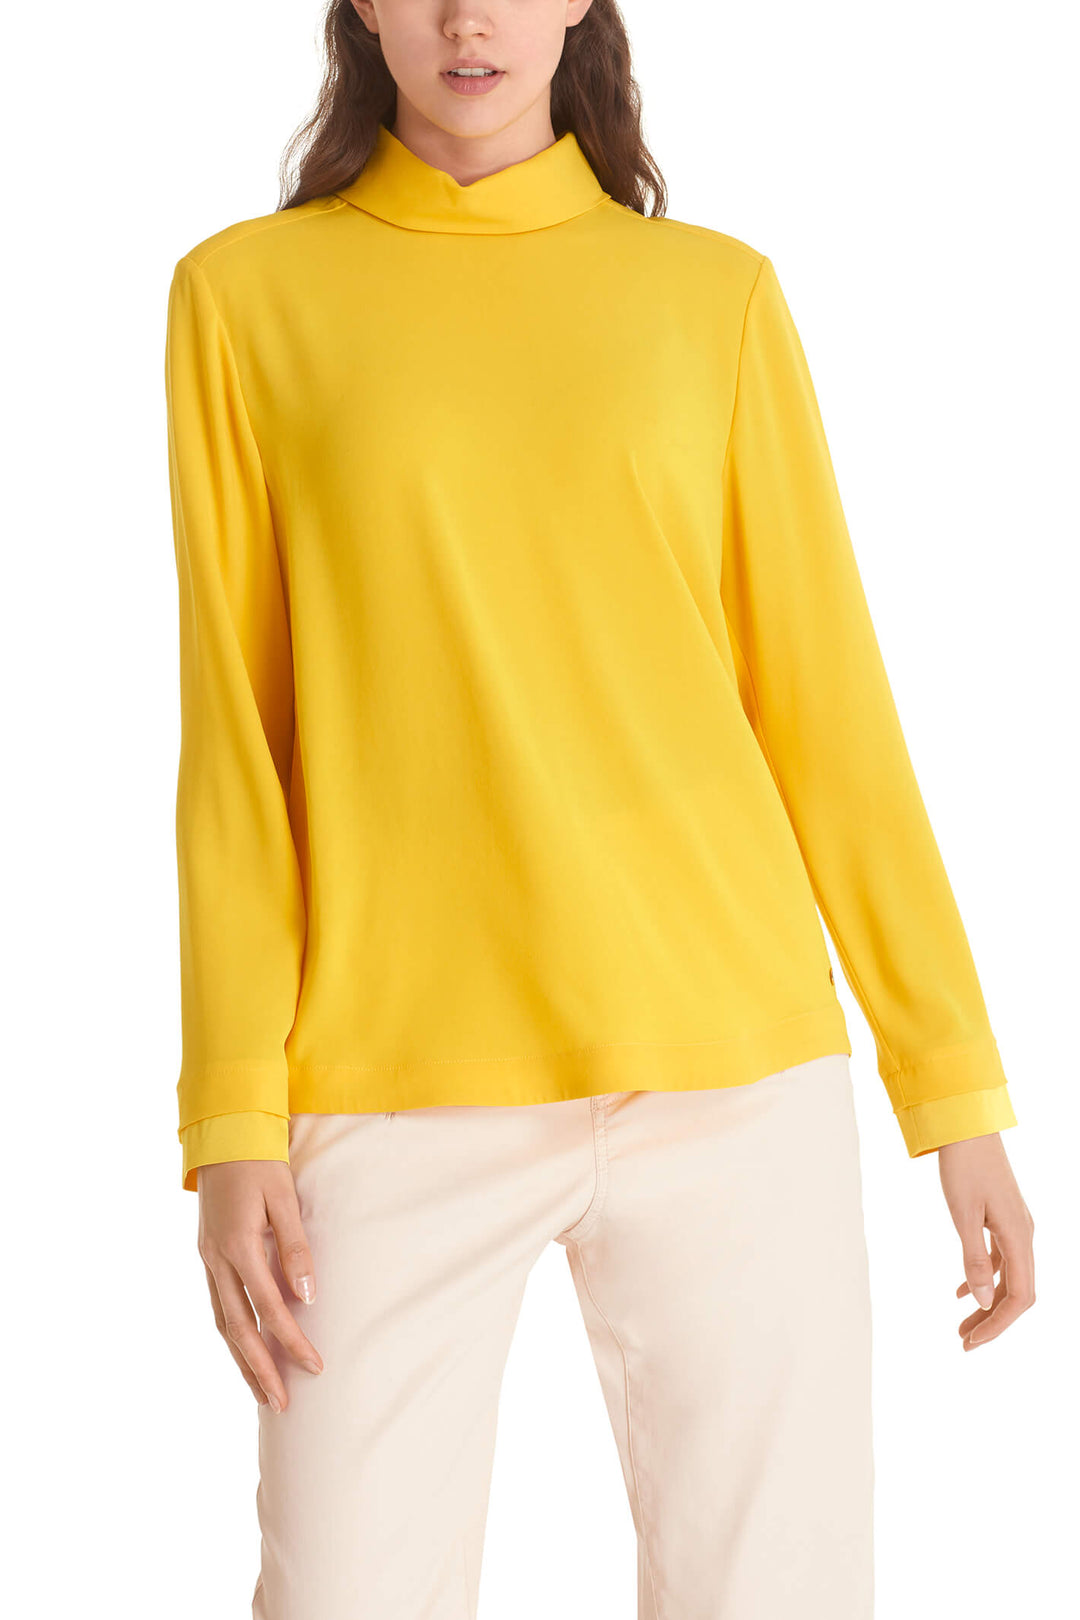 Marc Cain TC 55.13 W01 Saffron Yellow Reverse Collar Top - Olivia Grace Fashion